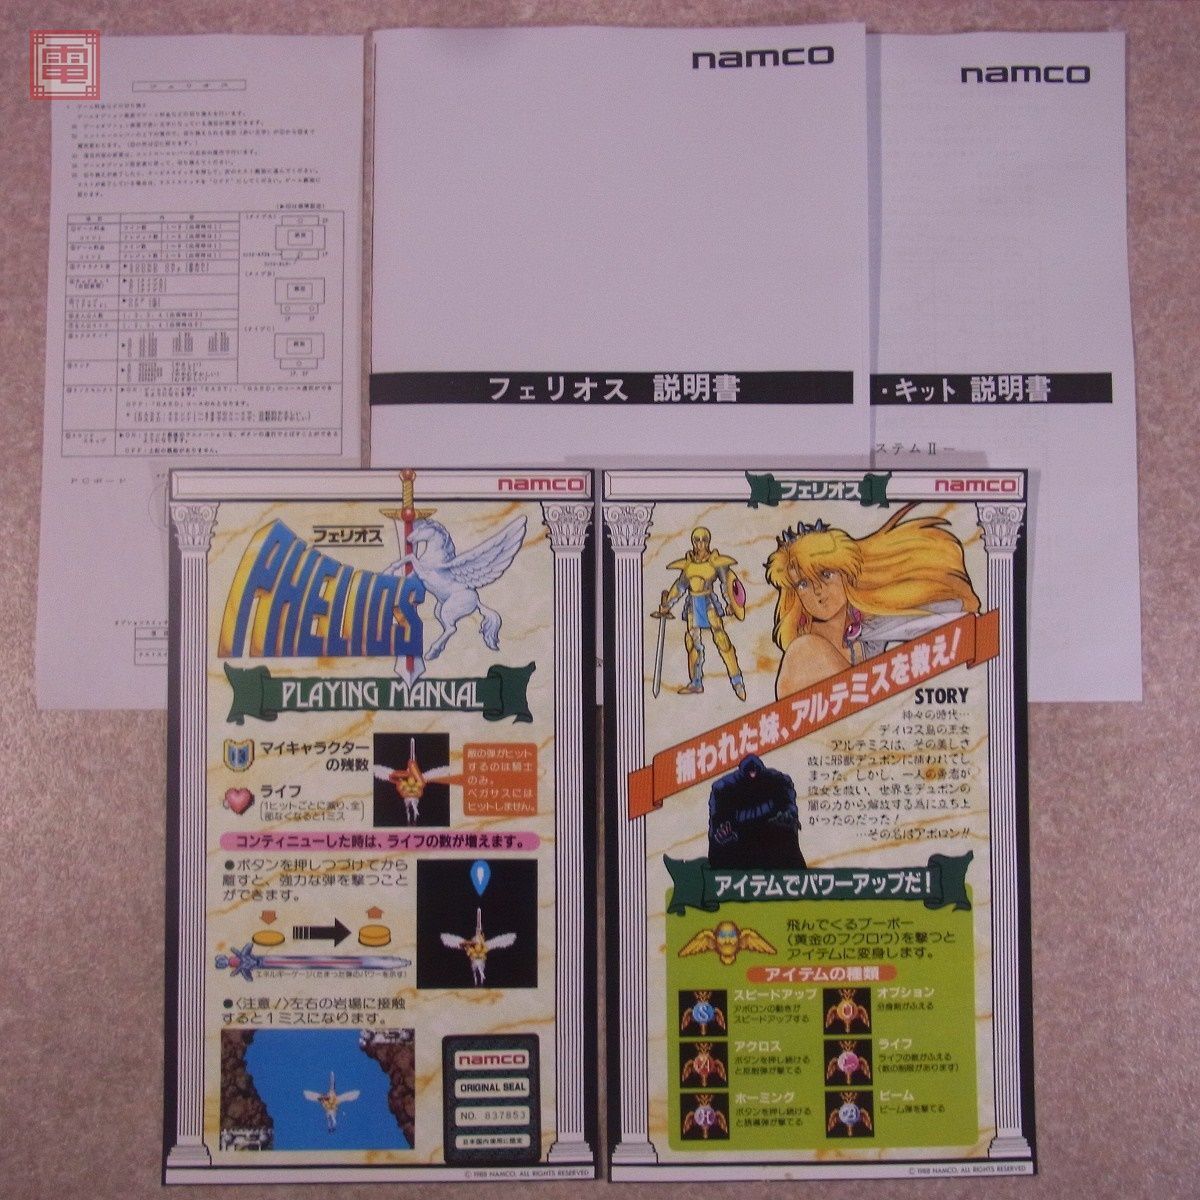 1 jpy ~ Namco /NAMCO Ferio sPHELIOS operation verification settled [20